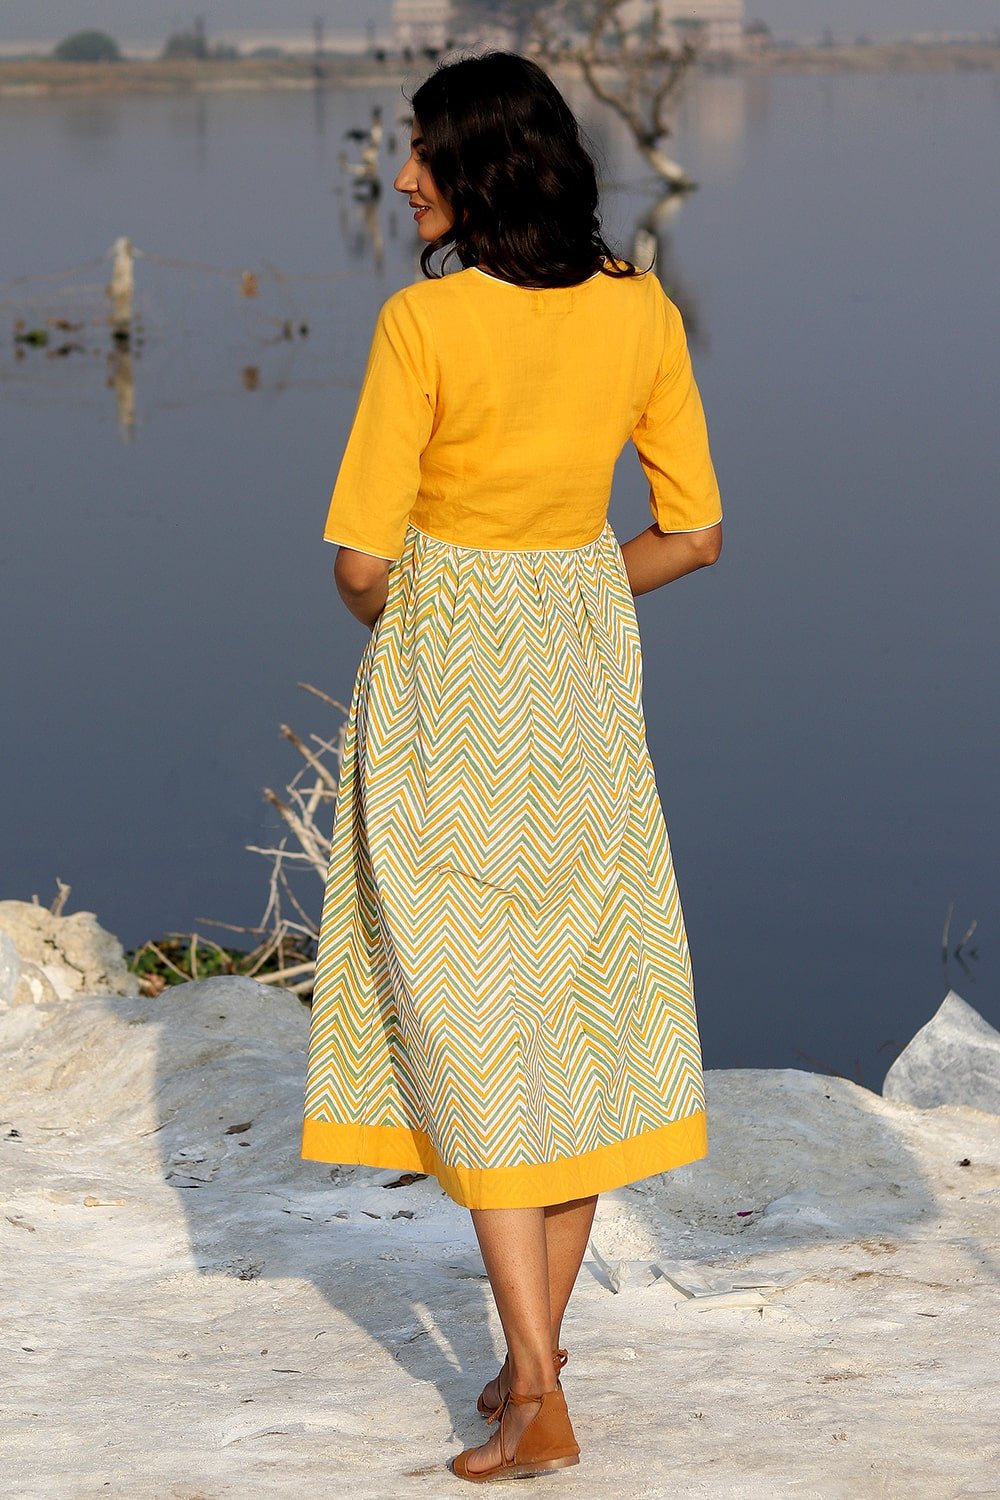 SootiSyahi 'Musterd Weave' Cotton Dress - SootiSyahi